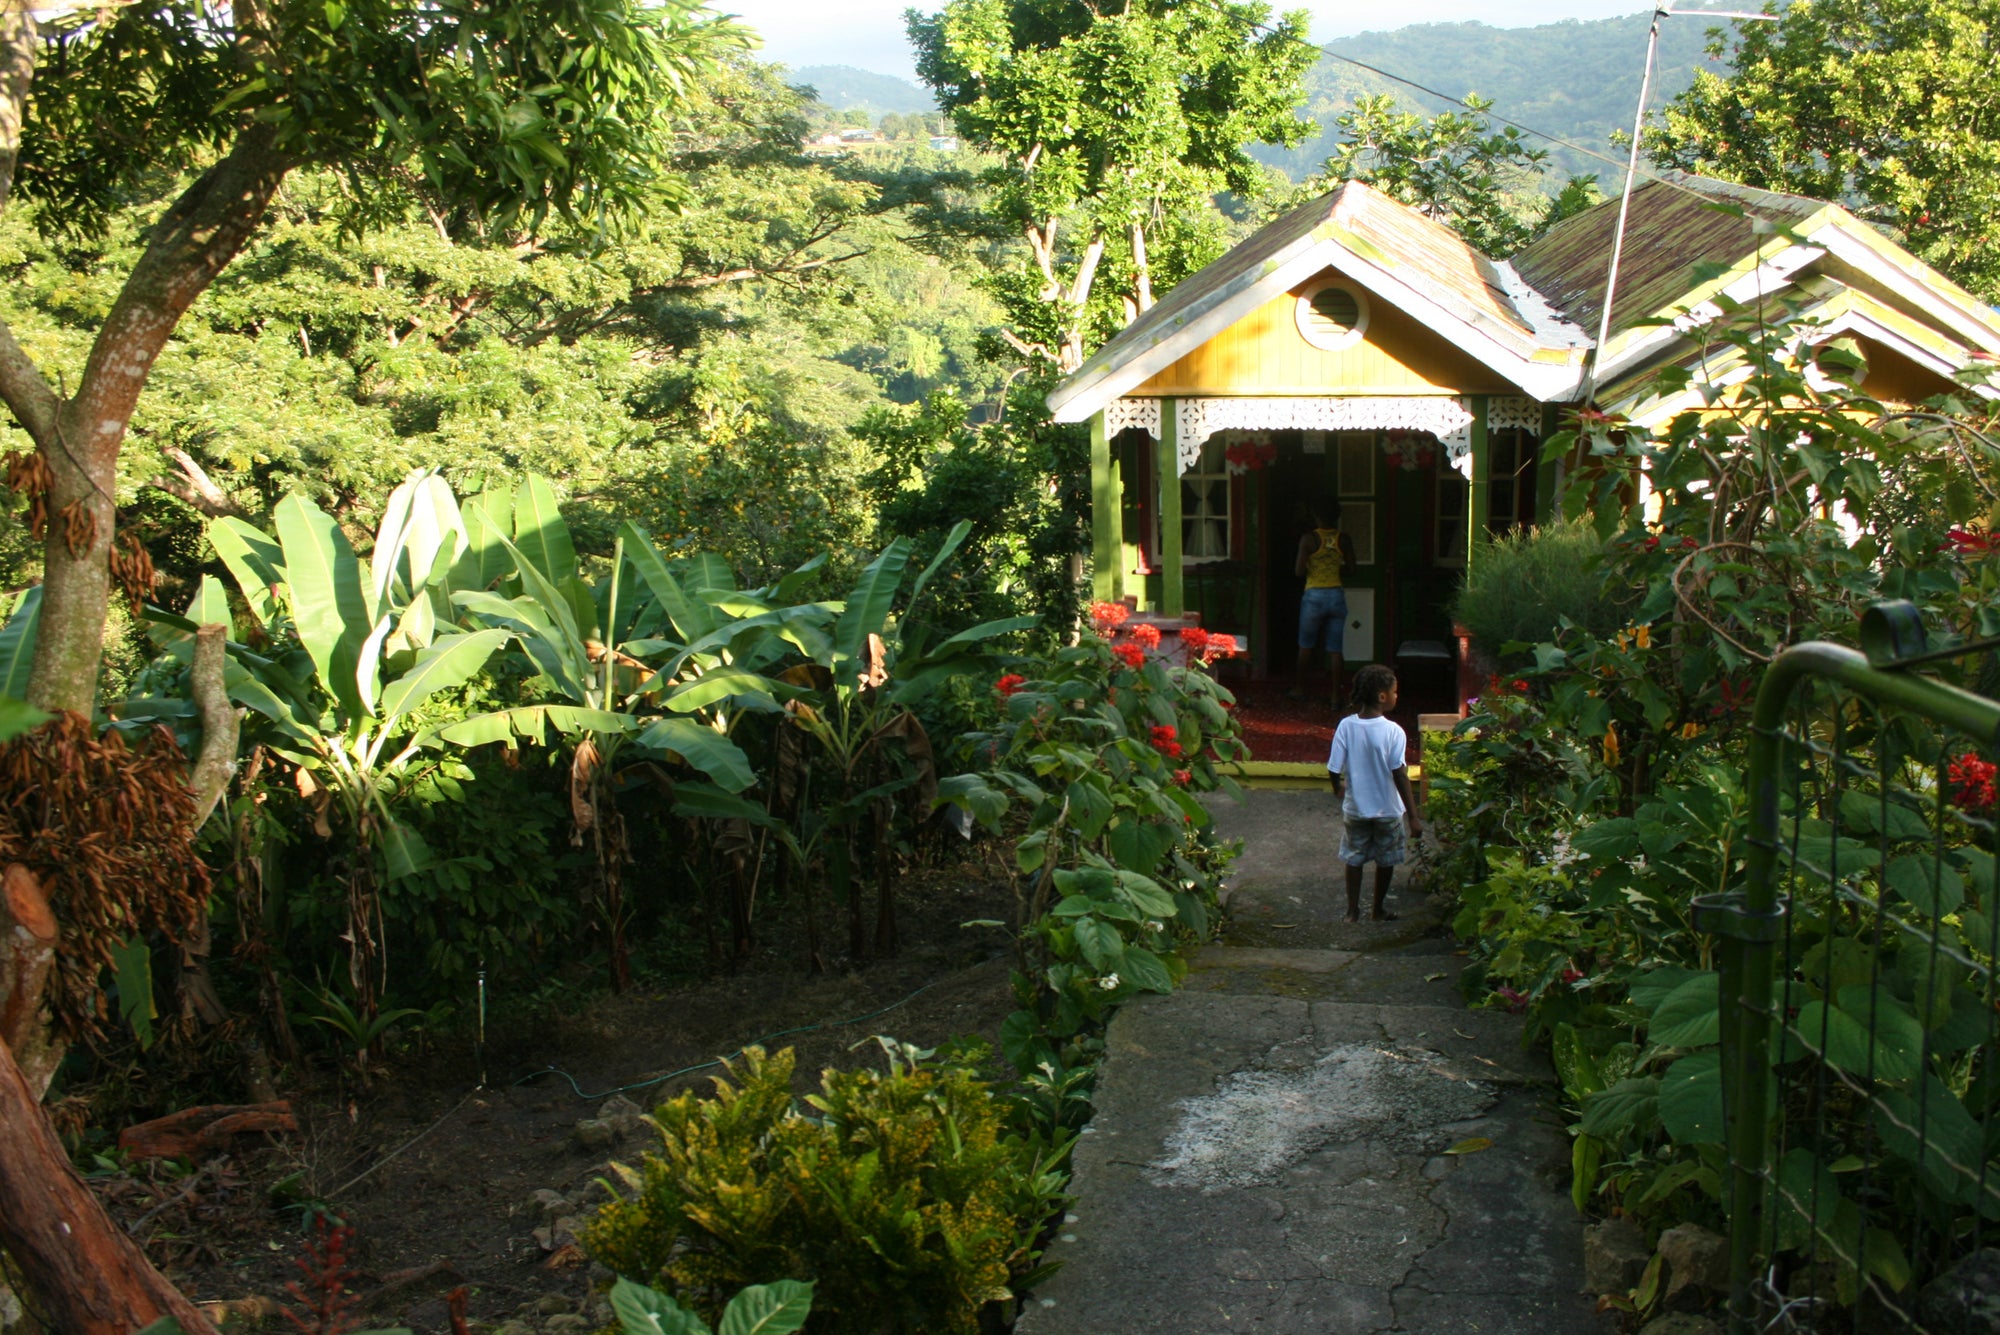 Childhood home in Wakefield District, Clarendon, Jamaica